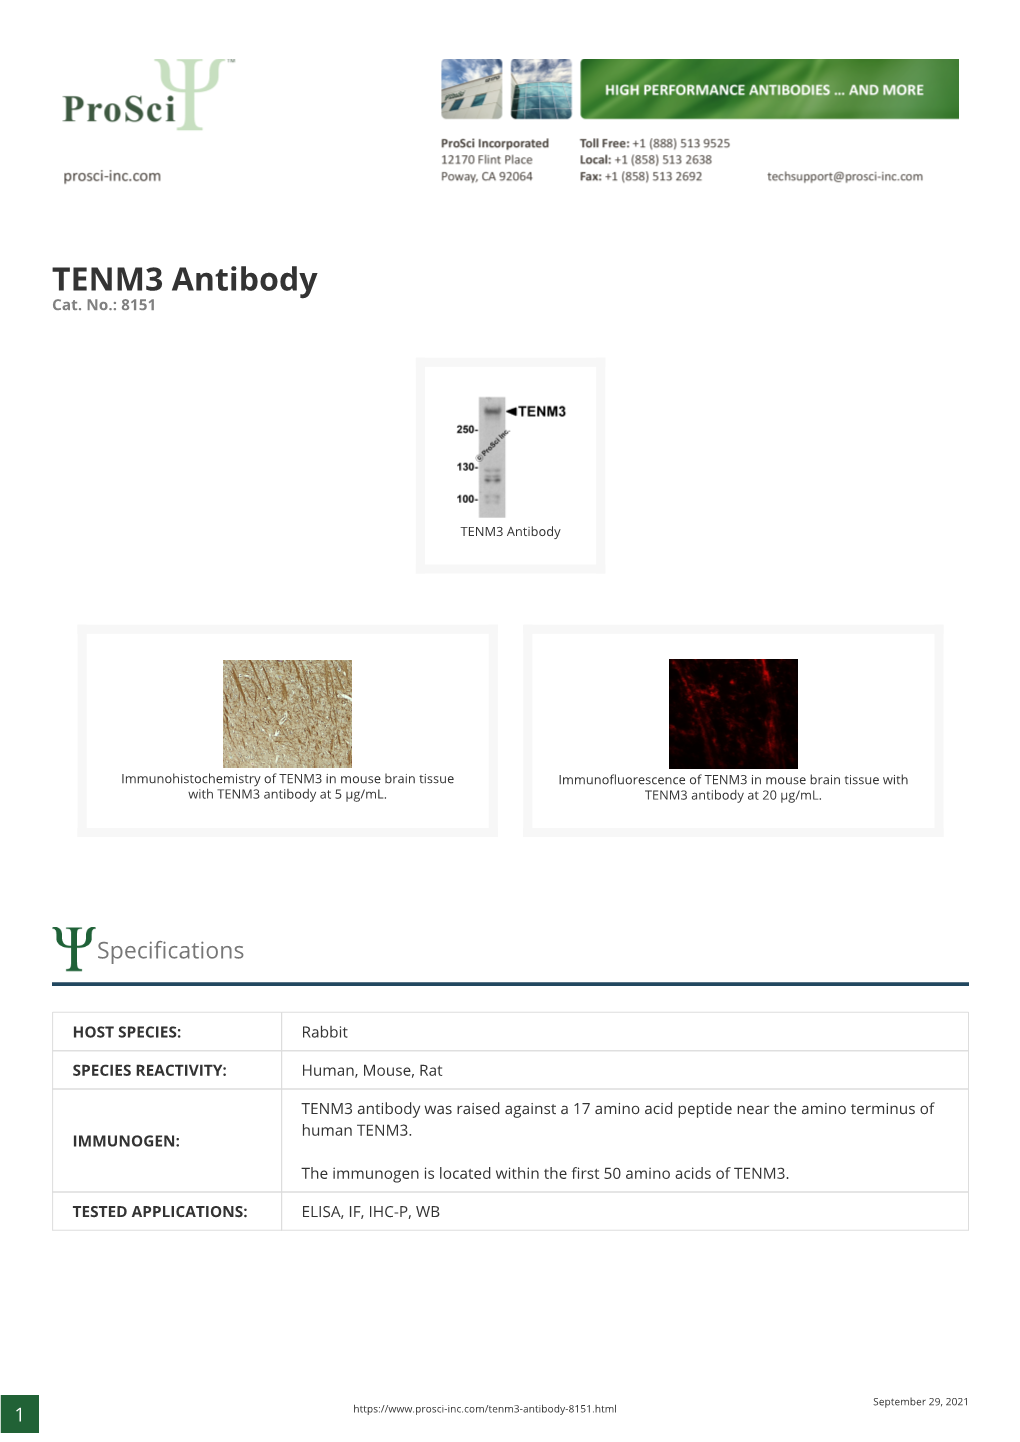 TENM3 Antibody Cat